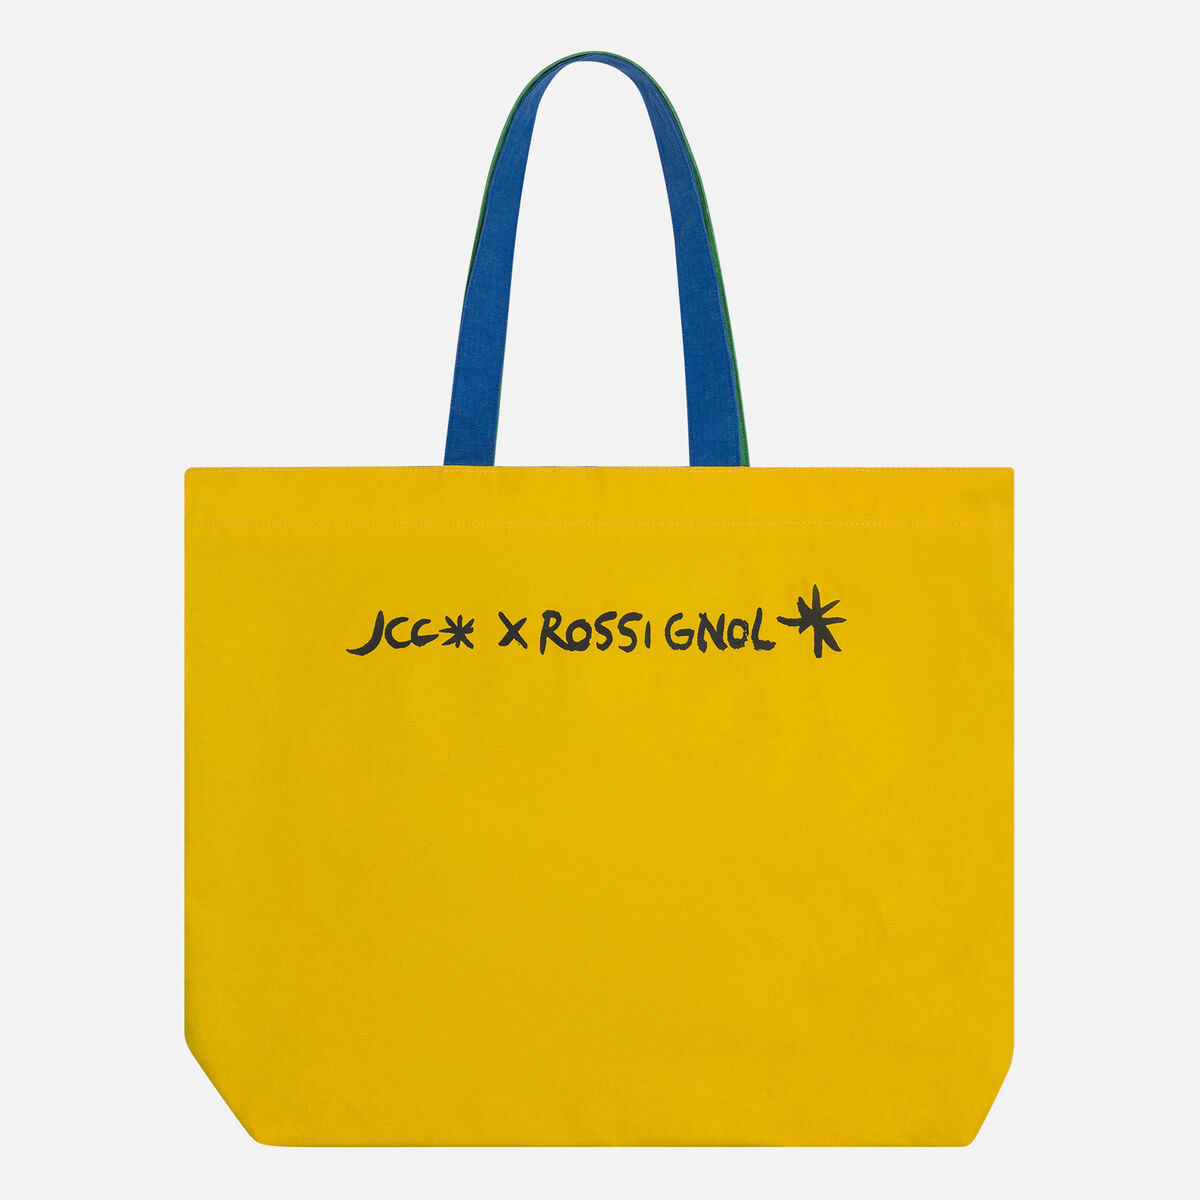 Rossignol Women's JCC Tote Bag Multicolor